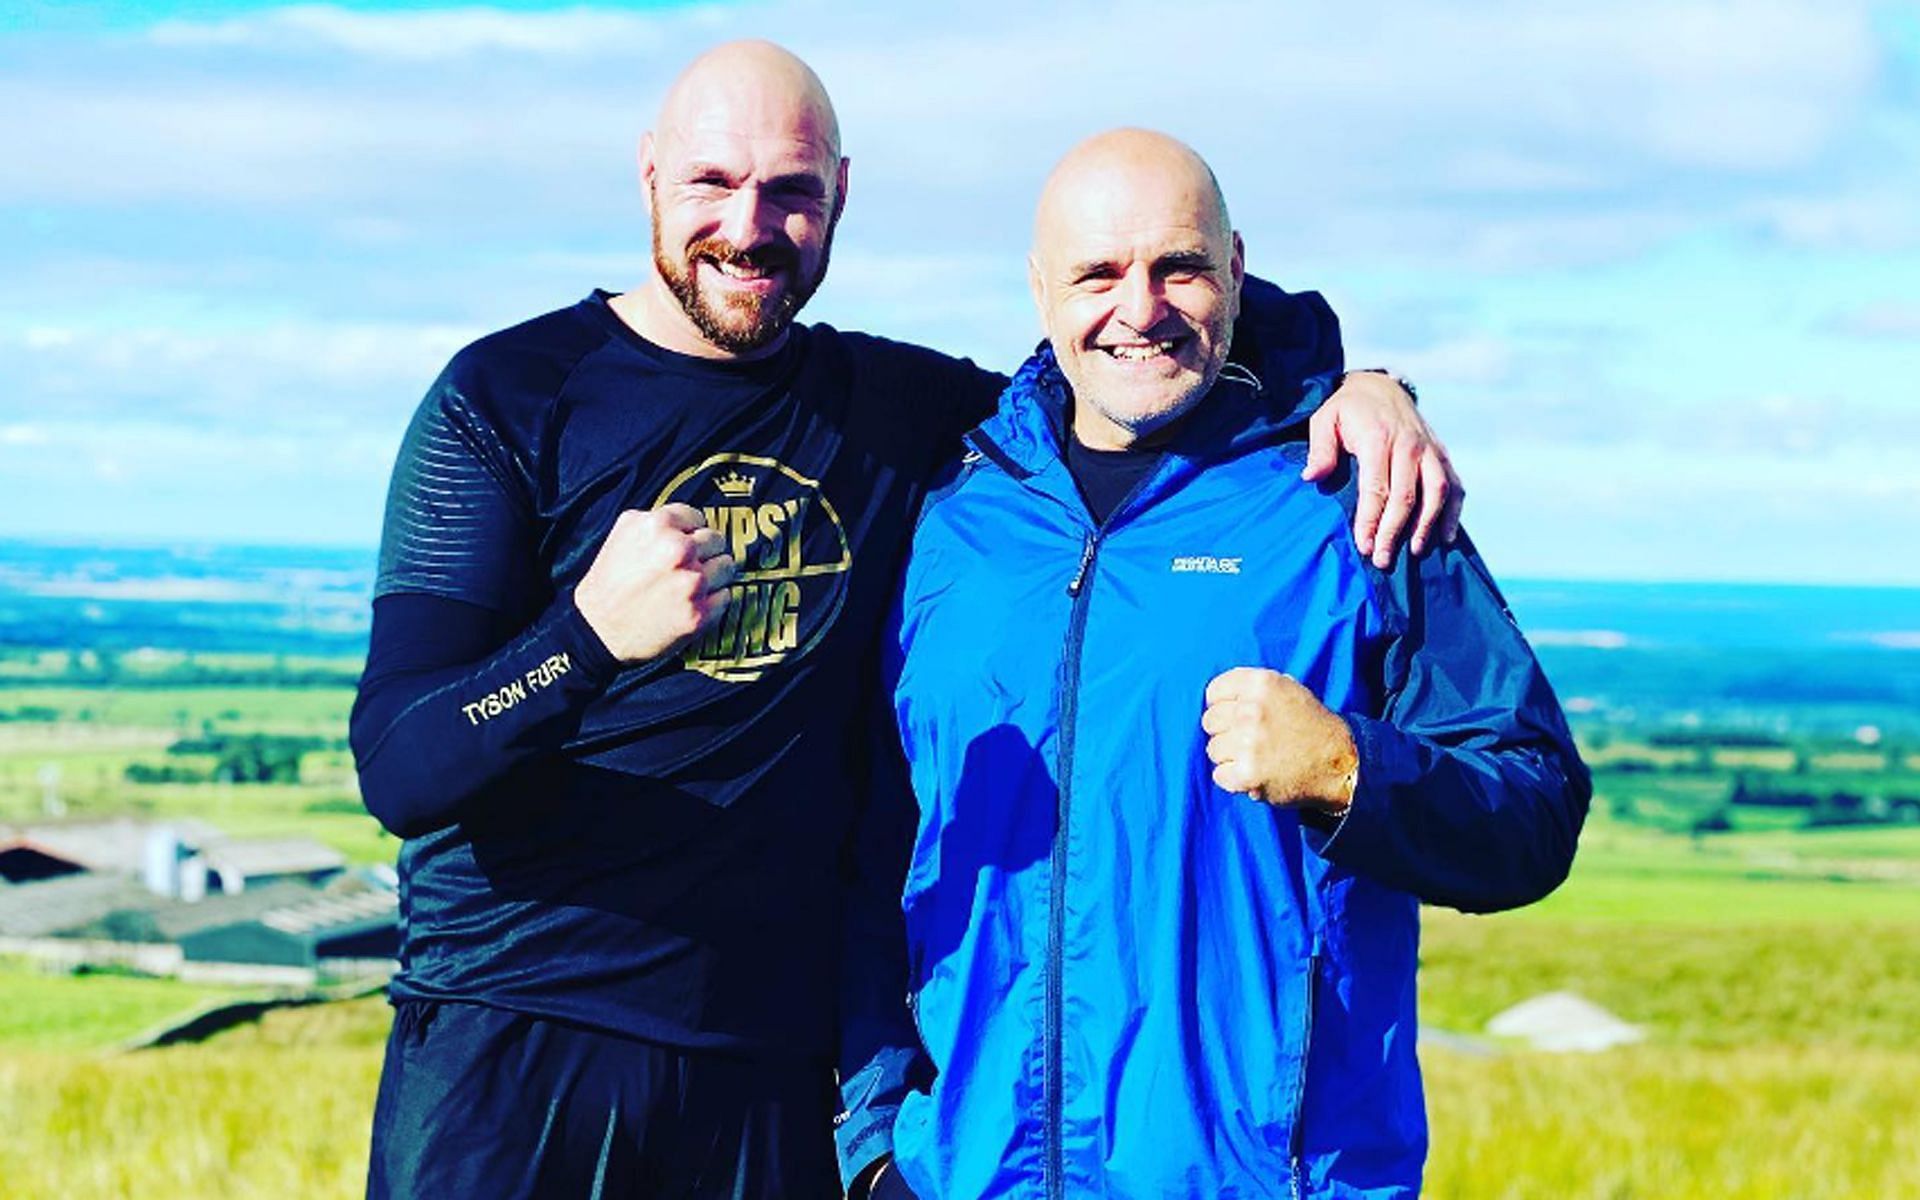 Tyson Fury (left) and John Fury (right) (Image via @gypsyjohnfury Instagram)